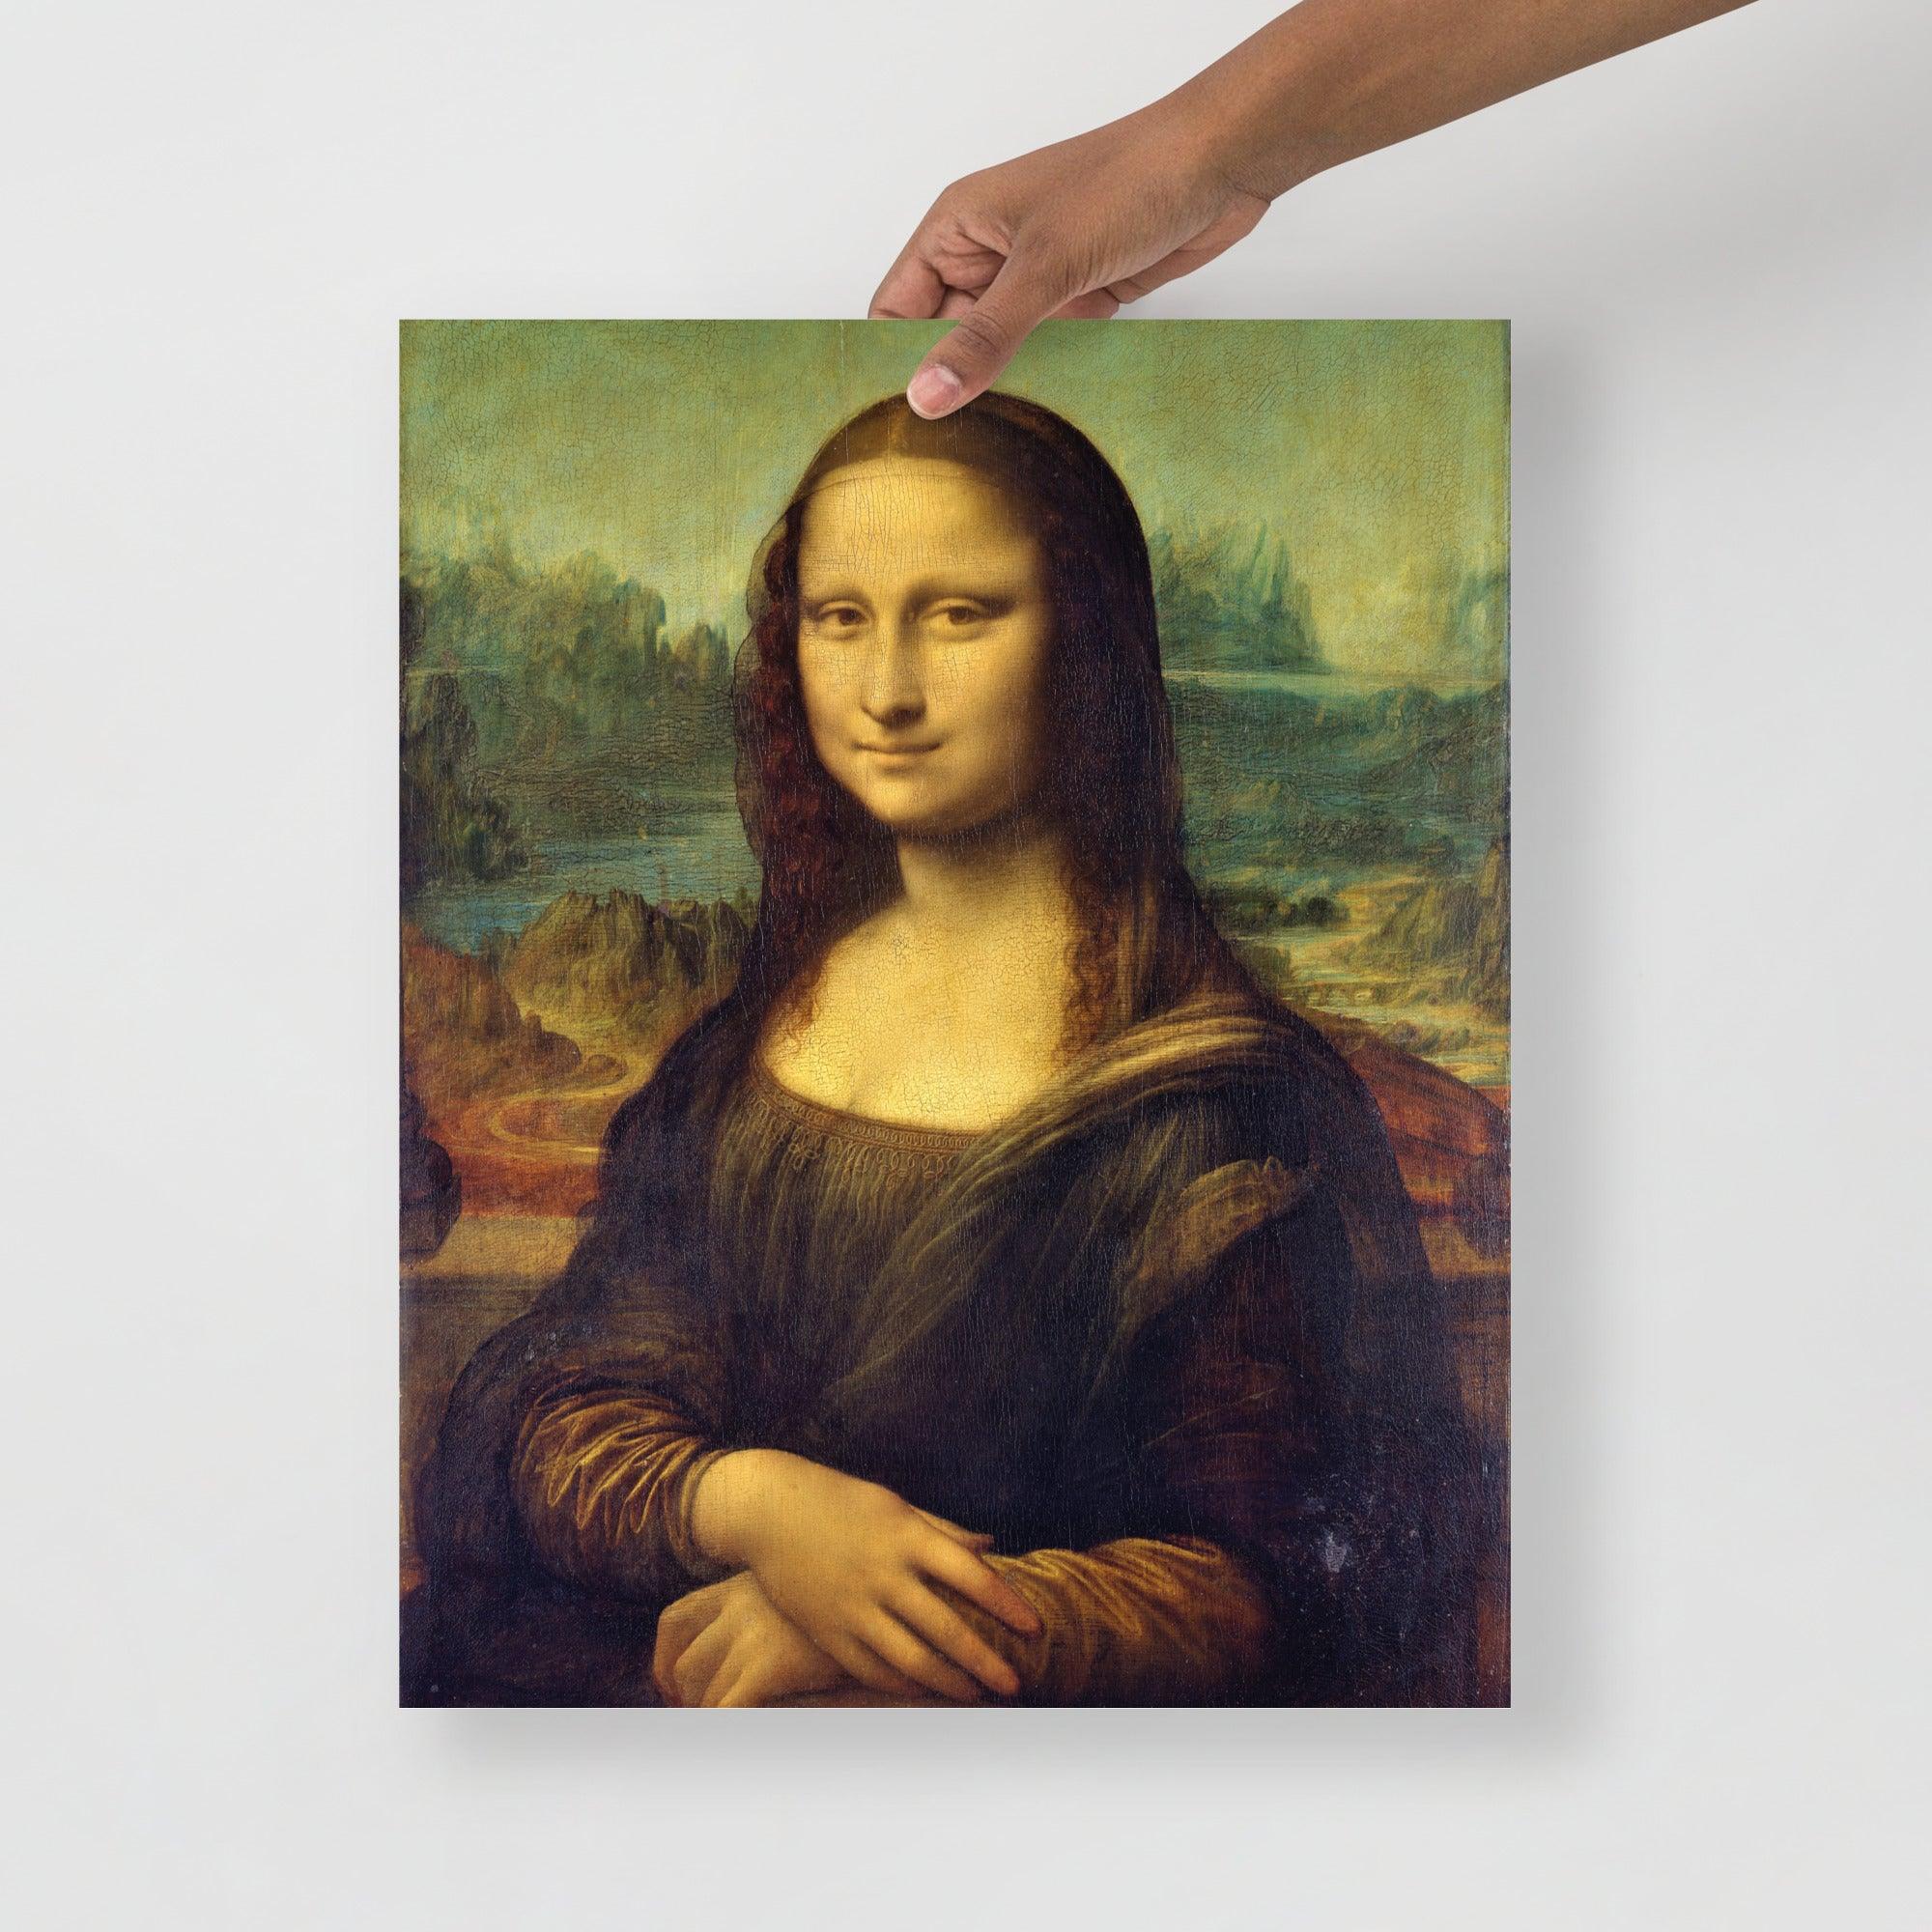 A Mona Lisa by Leonardo Da Vinci poster on a plain backdrop in size 16x20”.